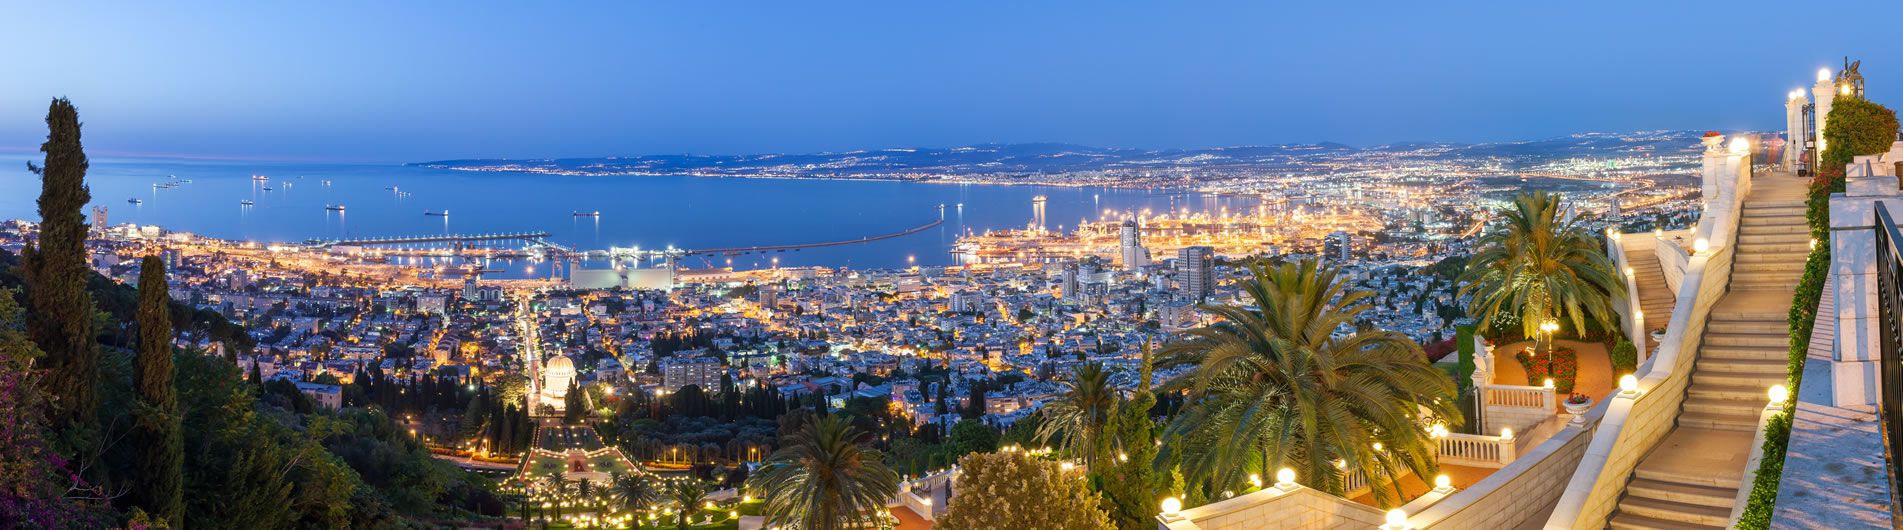 Tour of Haifa, Israel